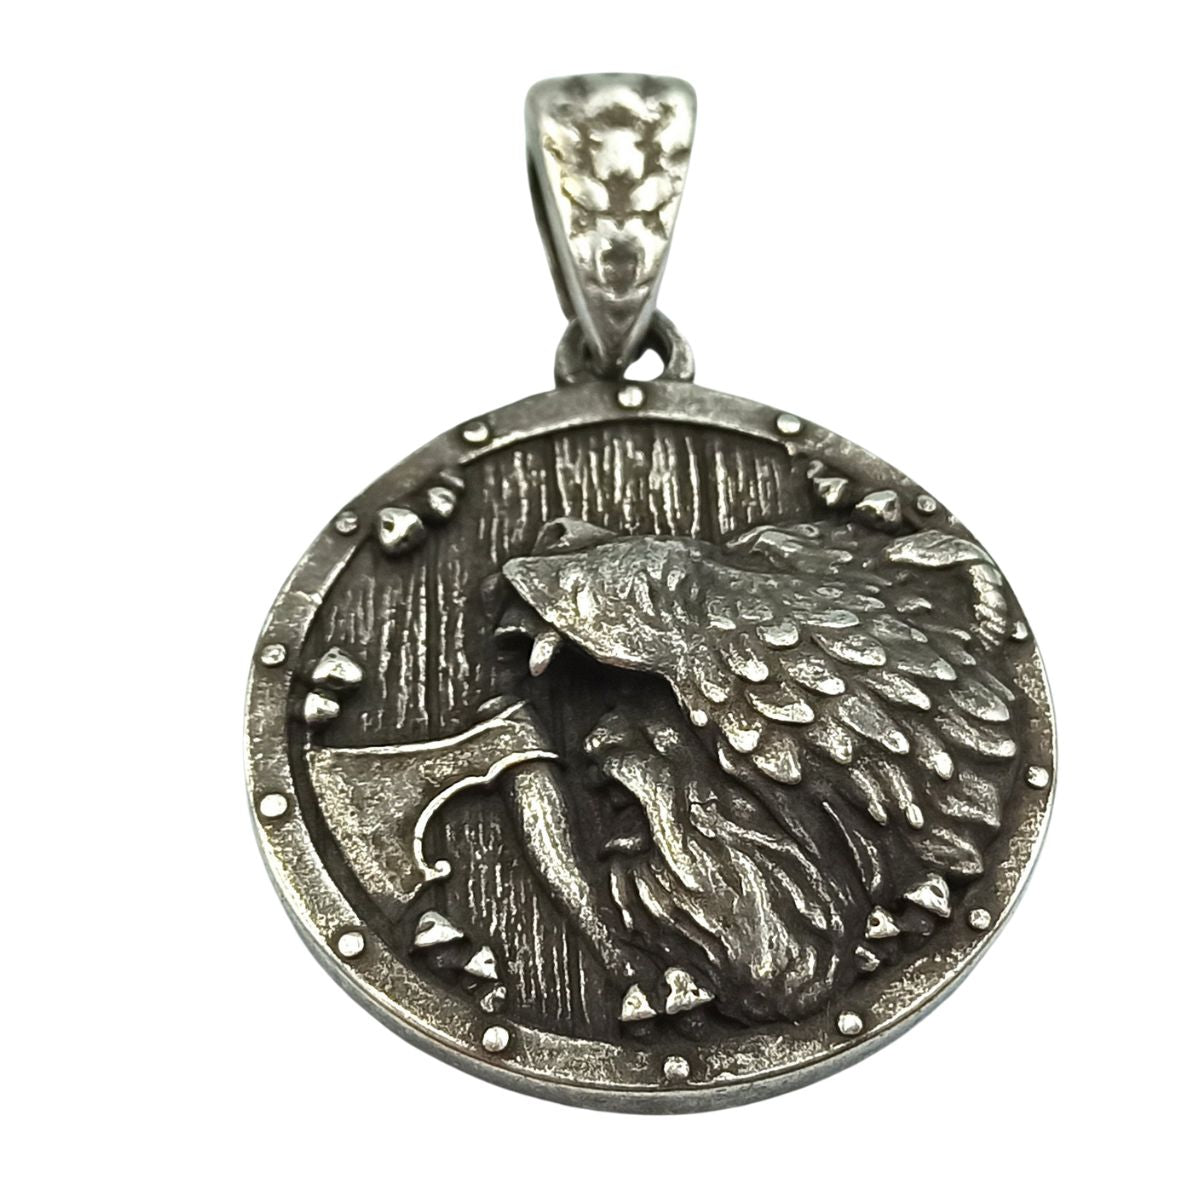 Berserker silver plated pendant